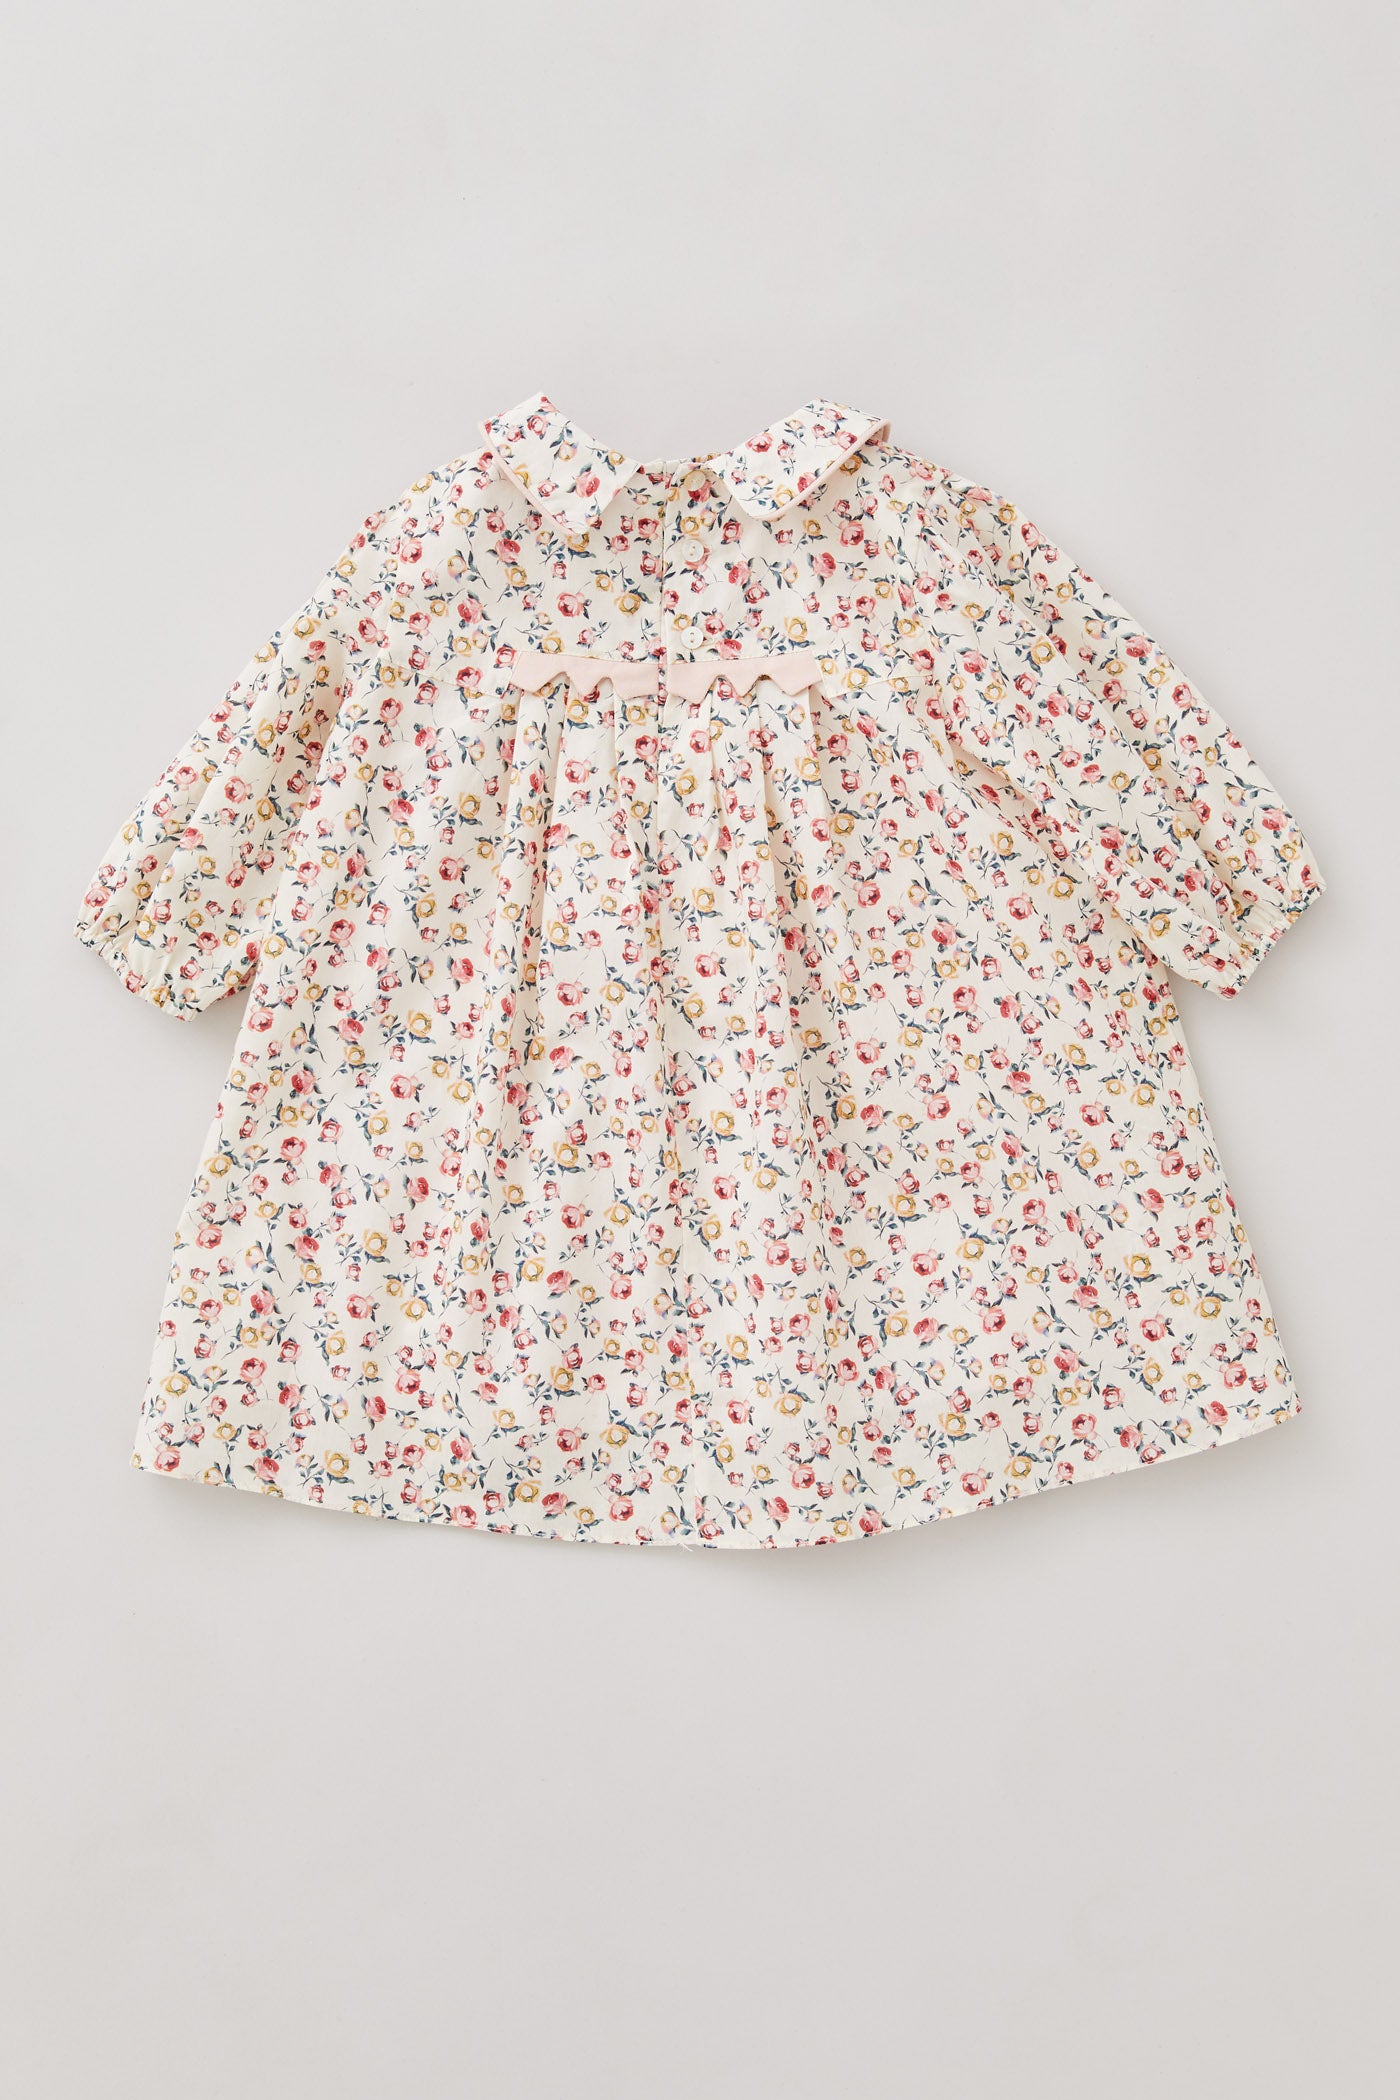 Baby Zigzag Dress in Cream Rosebuds Liberty Print - Designed by Ingrid Lewis - Strawberries & Cream